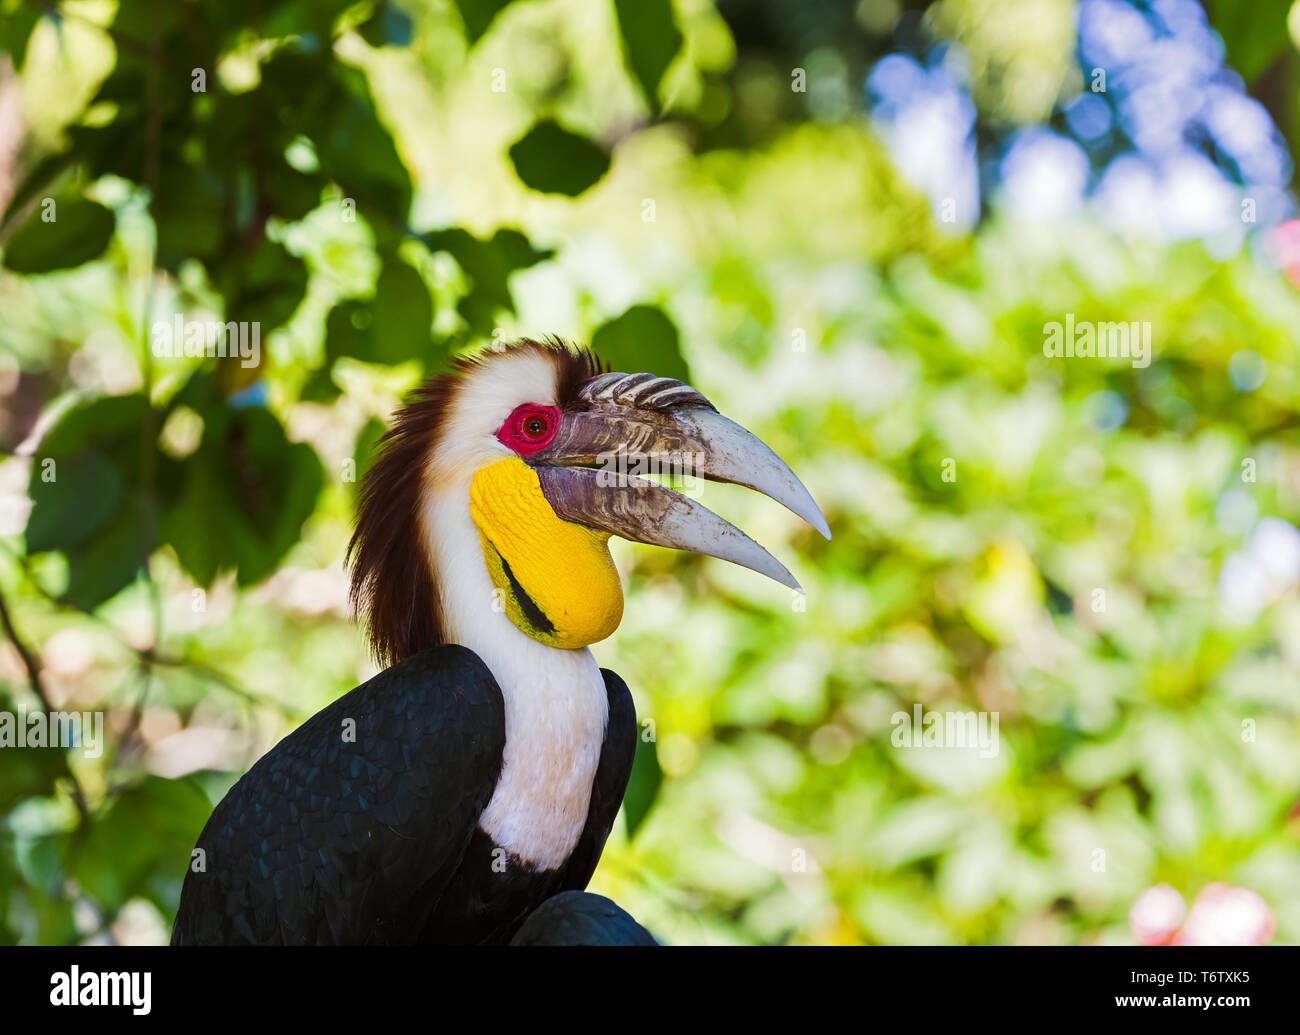 Wreathed Hornbill bird in Bali Island Indonesia Stock Photo